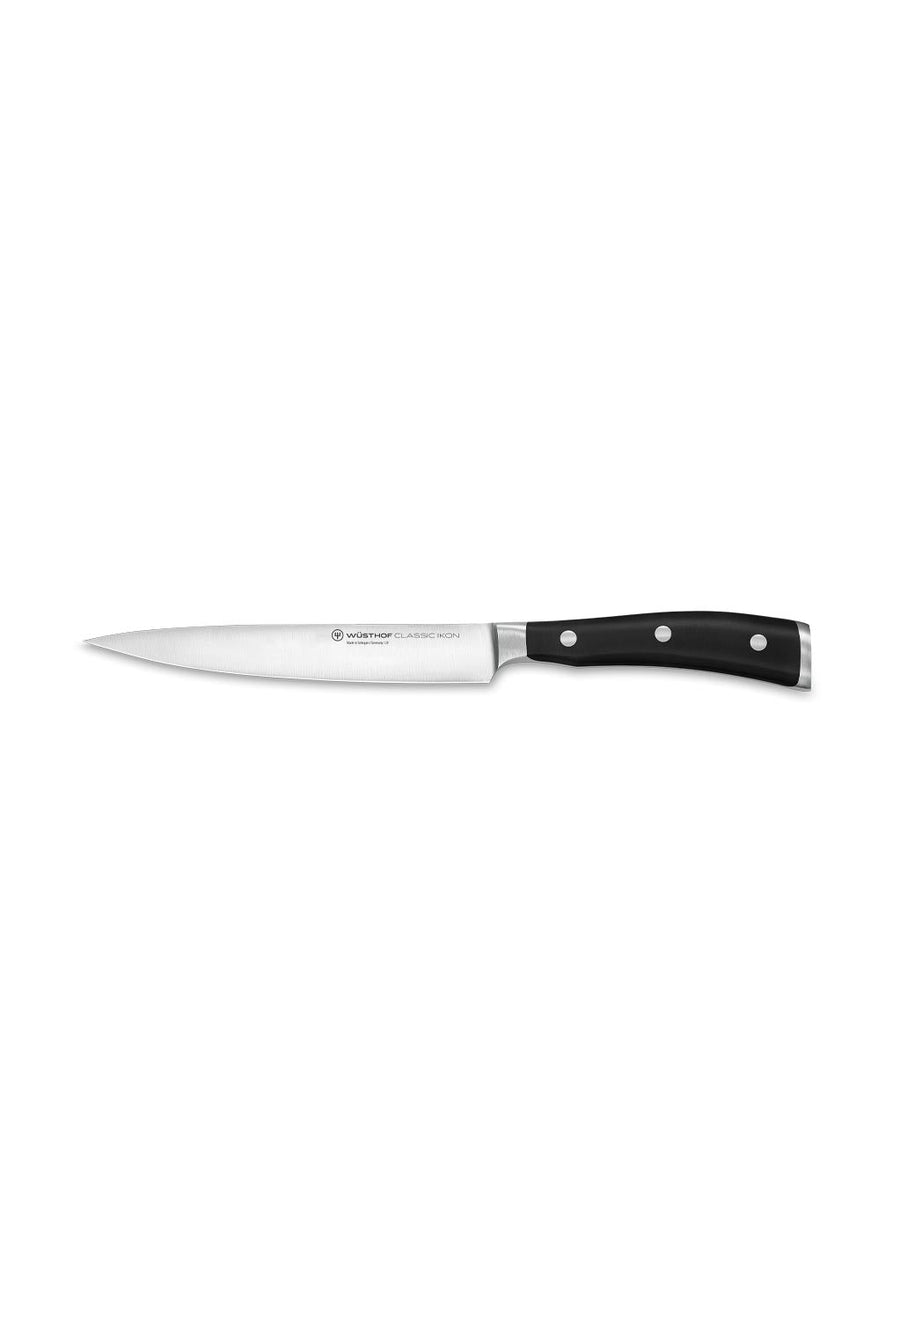 Wusthof Classic Ikon Fillet Knife